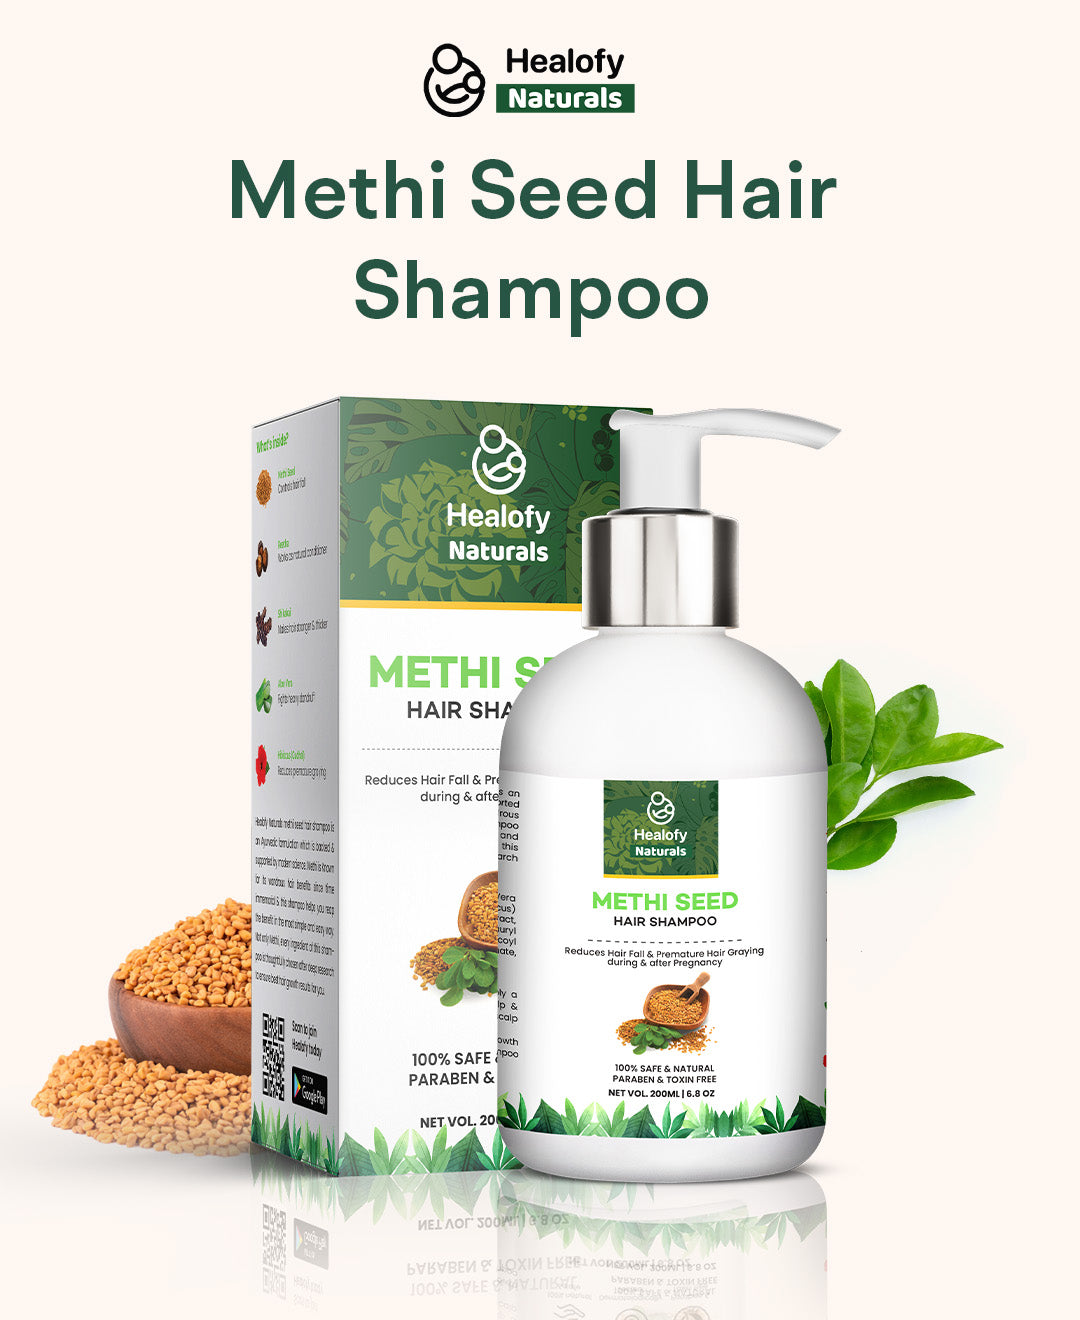 Healofy Naturals Methi Seed Hair Shampoo